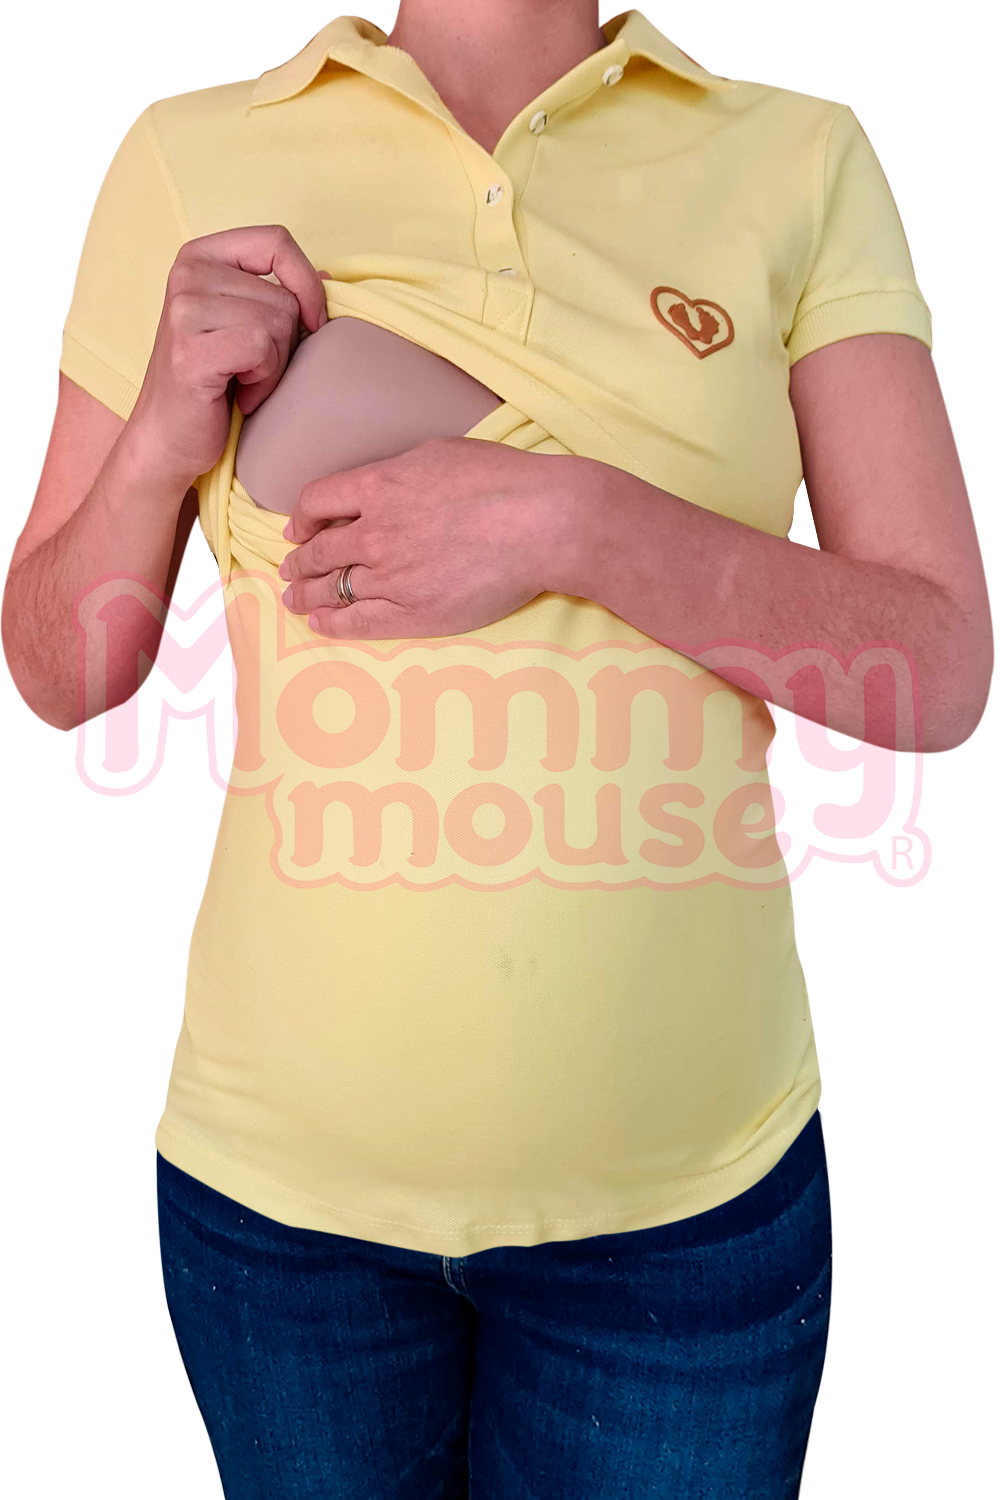 Blusa maternidad - lactancia Tipo Polo. Amarillo